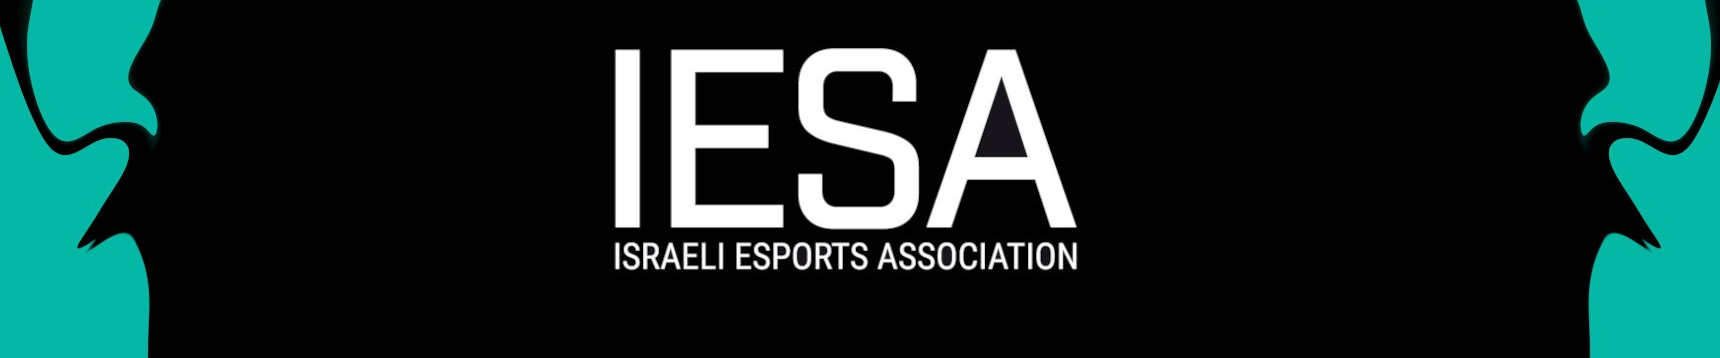 Israeli Esports Association